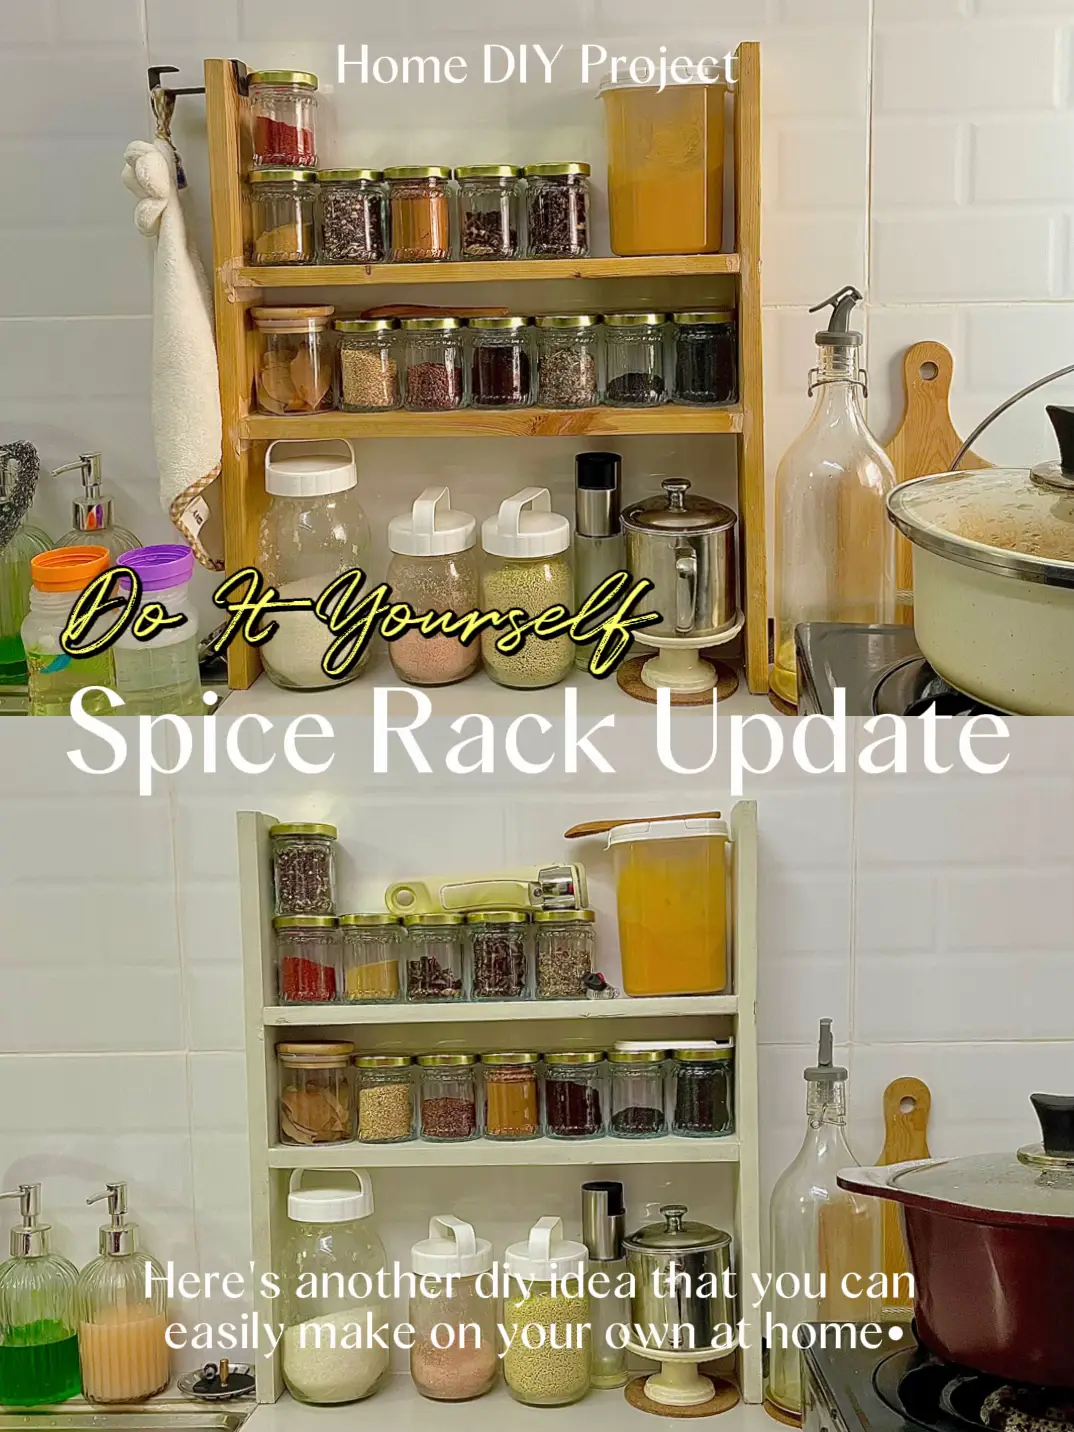 DIY SPICE JAR LABELS WITH CRICUT  Pantry Organization Labels // diy  aesthetic kitchen organization 